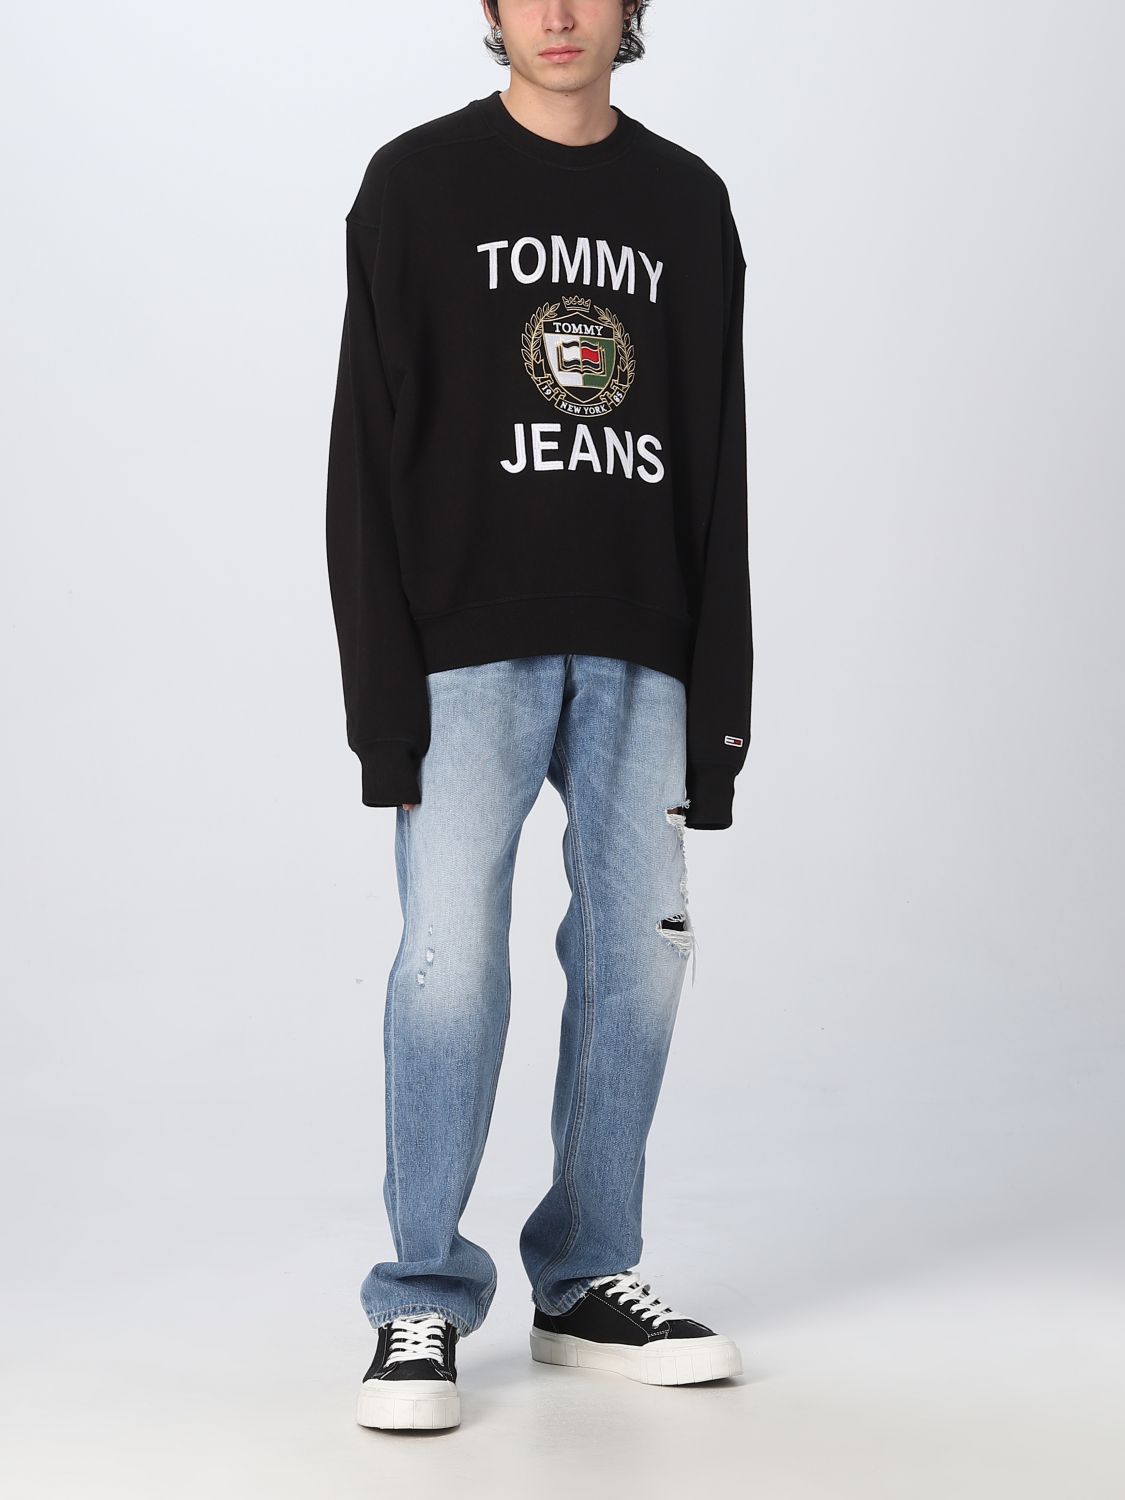 Sudadera Tommy Jeans Oversize para Hombre Negra